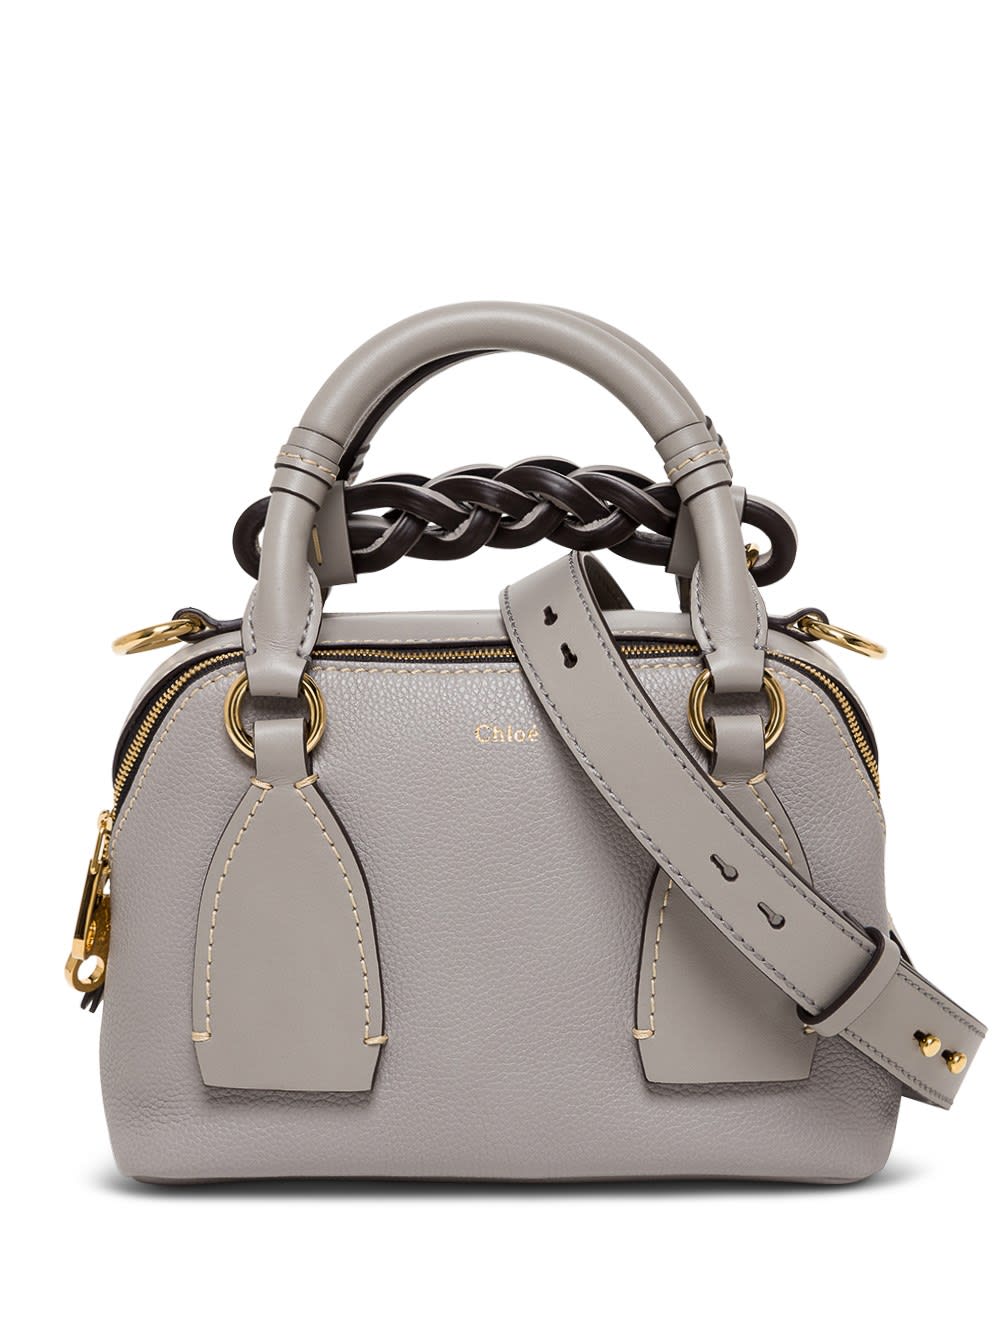 Chloé Gray Leather Daria Handbag